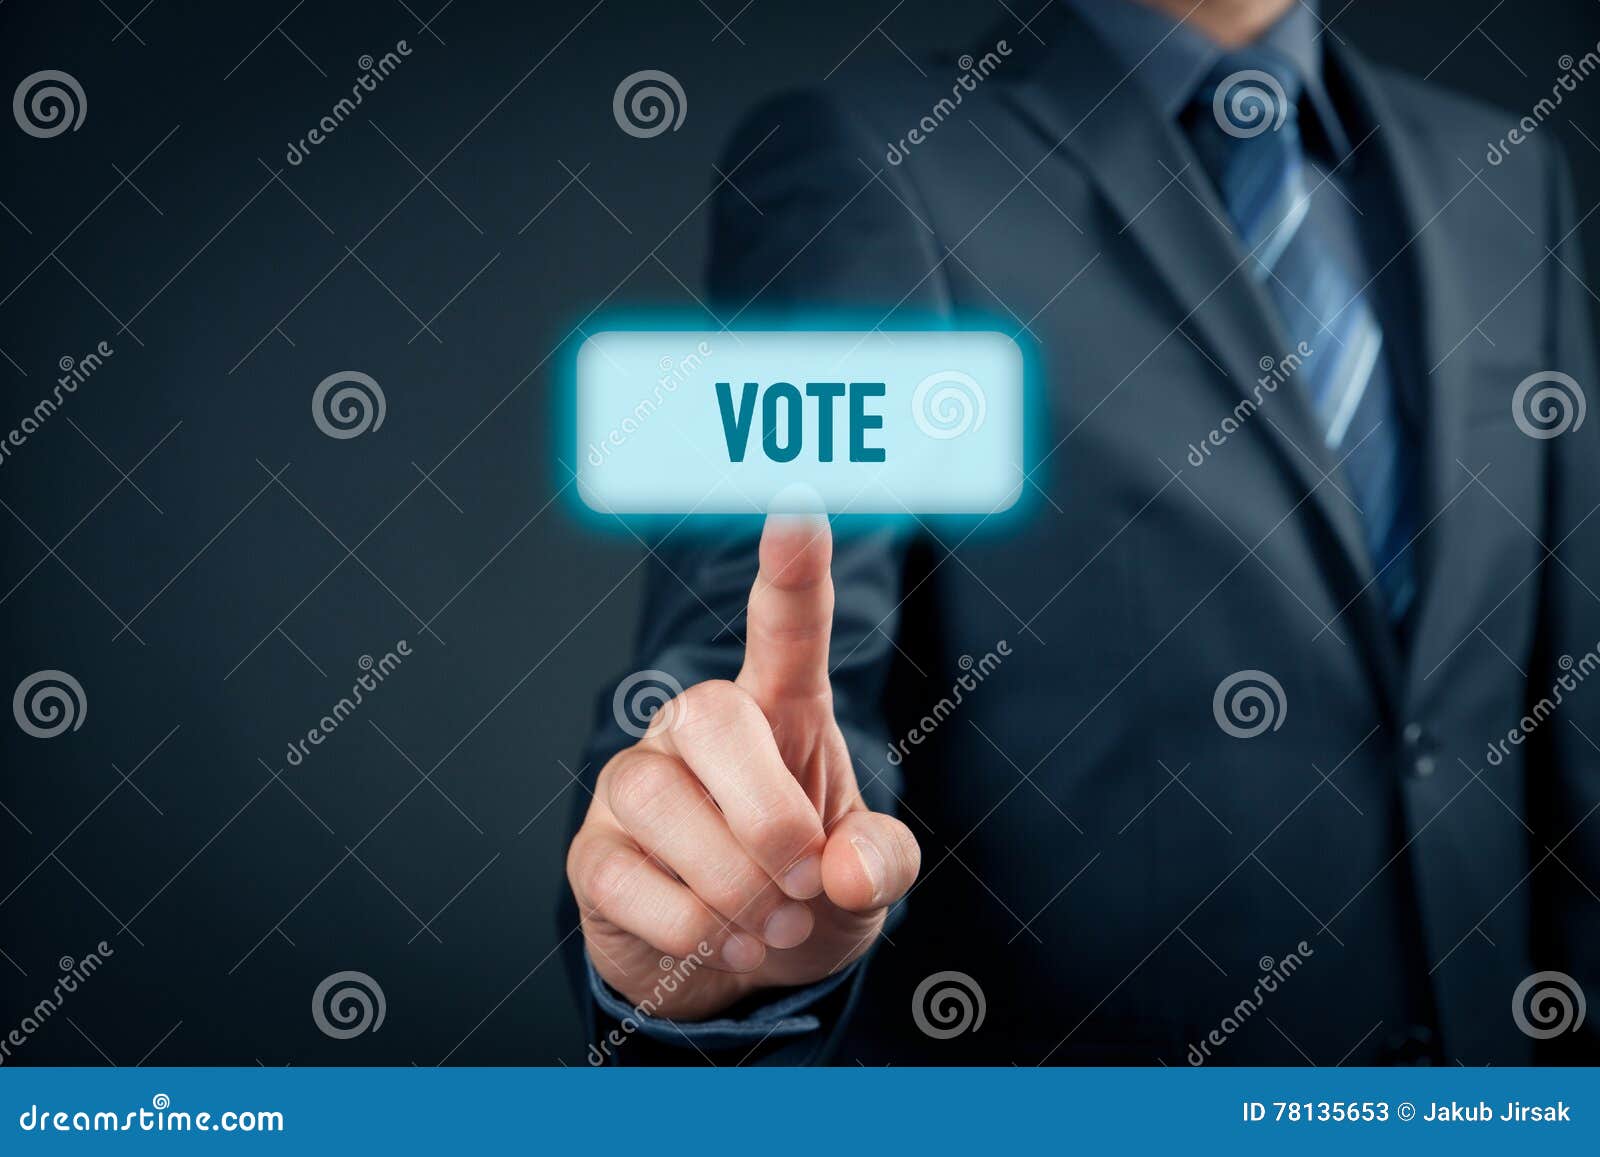 electronic internet voting